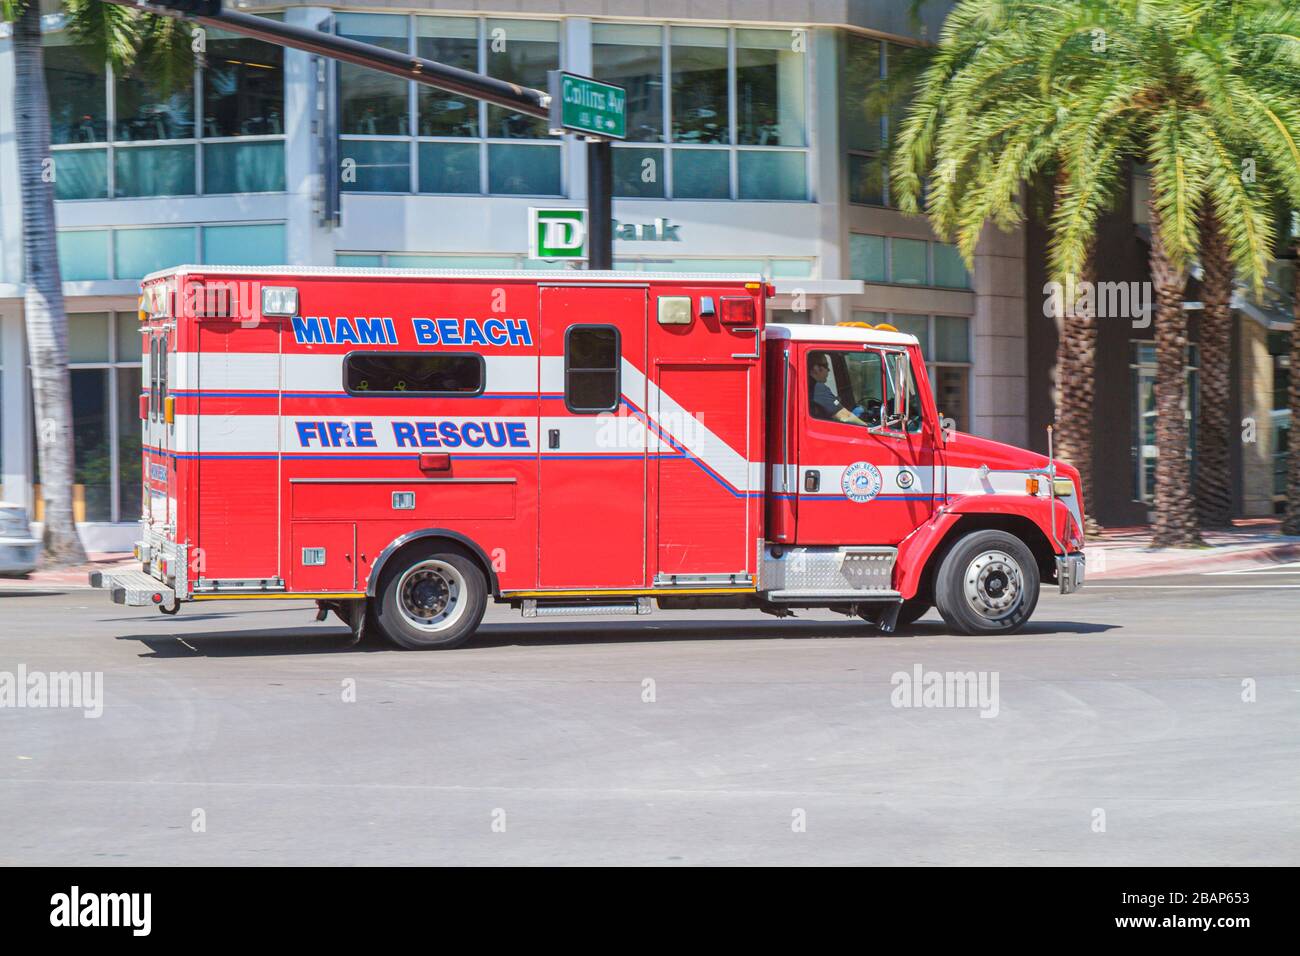 Miami Beach Florida,5th Fifth Street,Miami Beach,Fire Rescue,ambulance,emergency,vehicle,red,FL111014067 Stock Photo